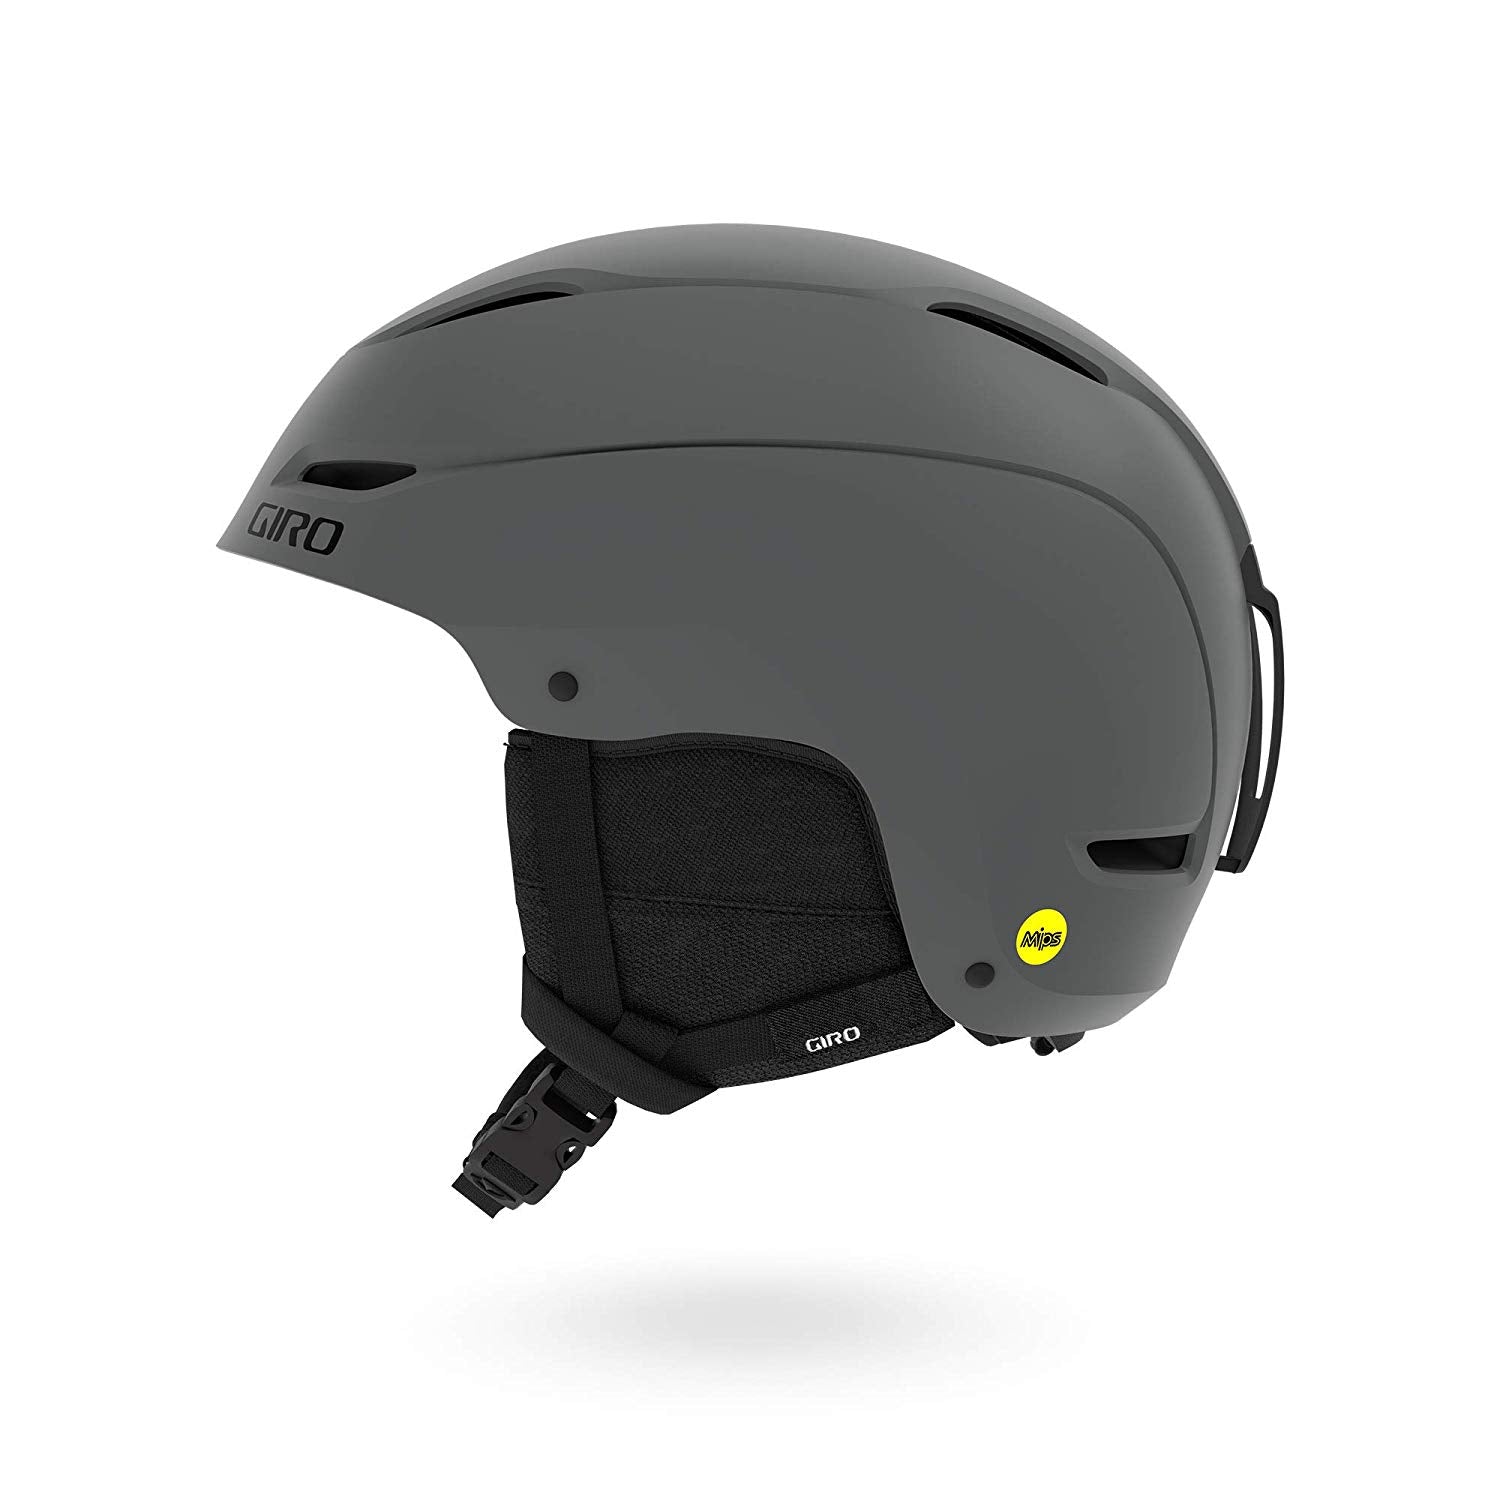 Giro - Ratio MIPS XL Matte Titanium Snow Helmet